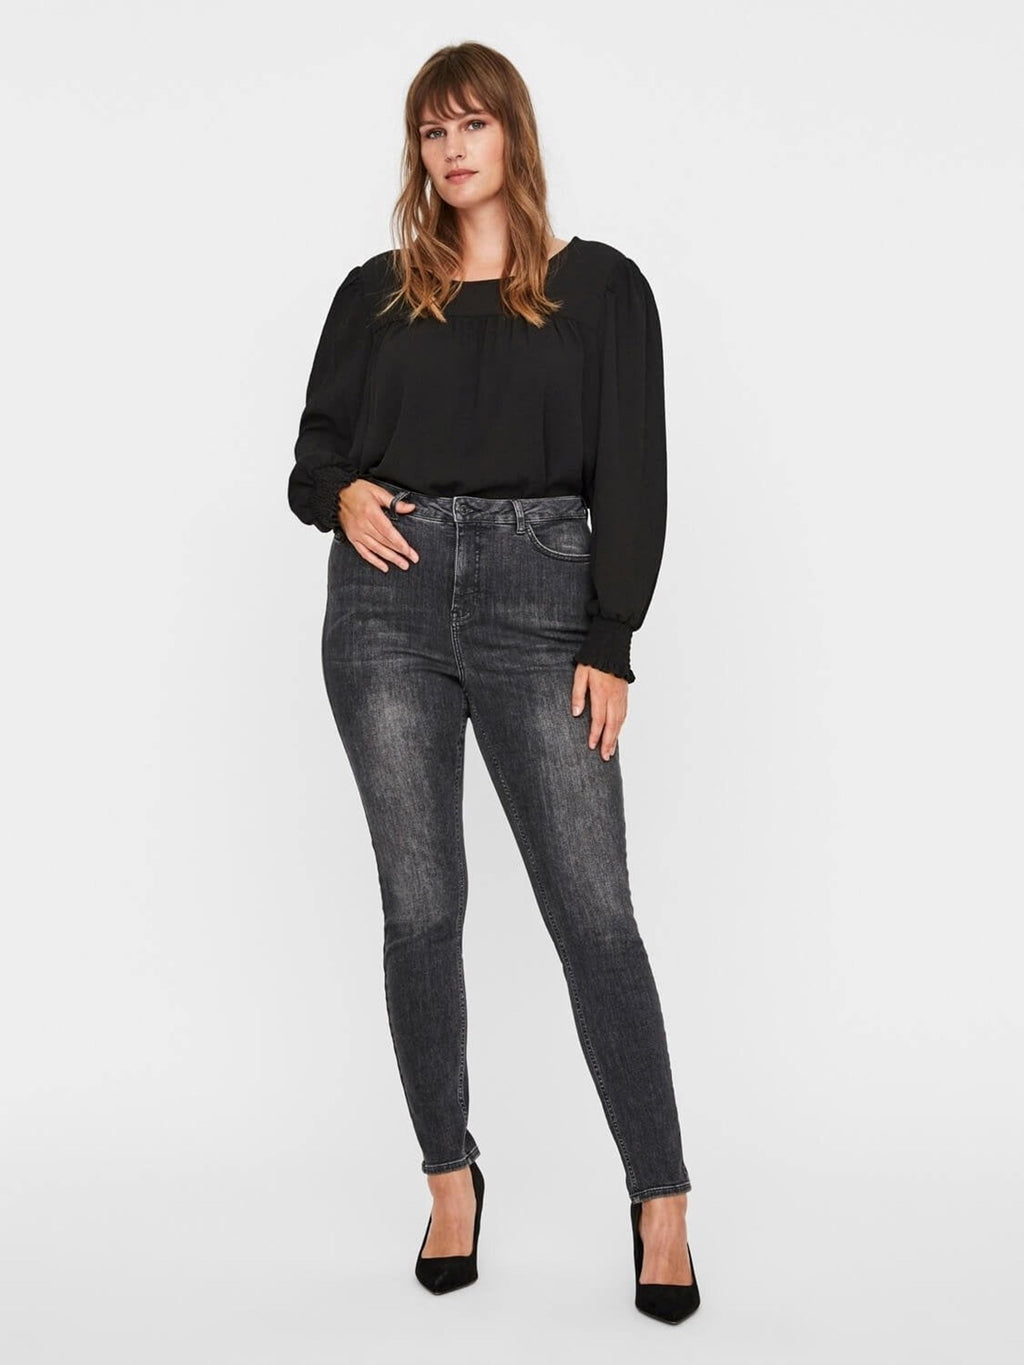 Lora Jeans high-waisted (Curve) - Black-grey denim